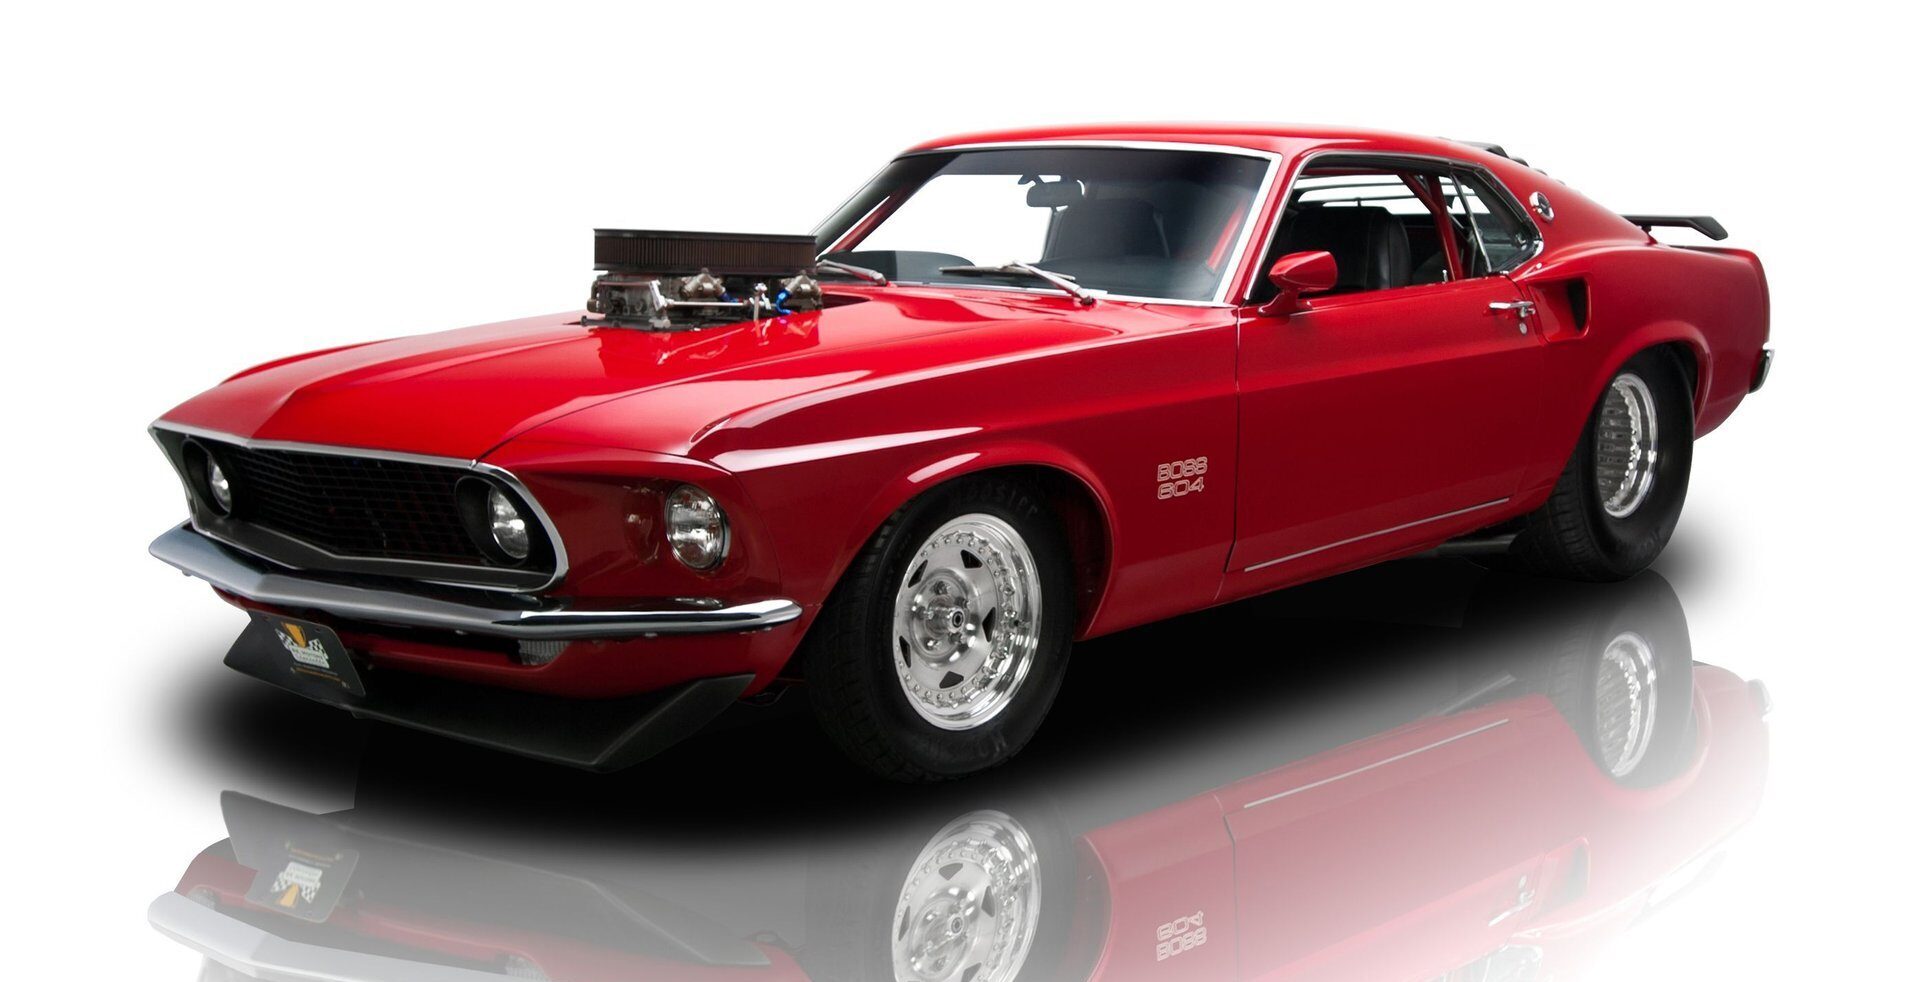  1969 Mustang